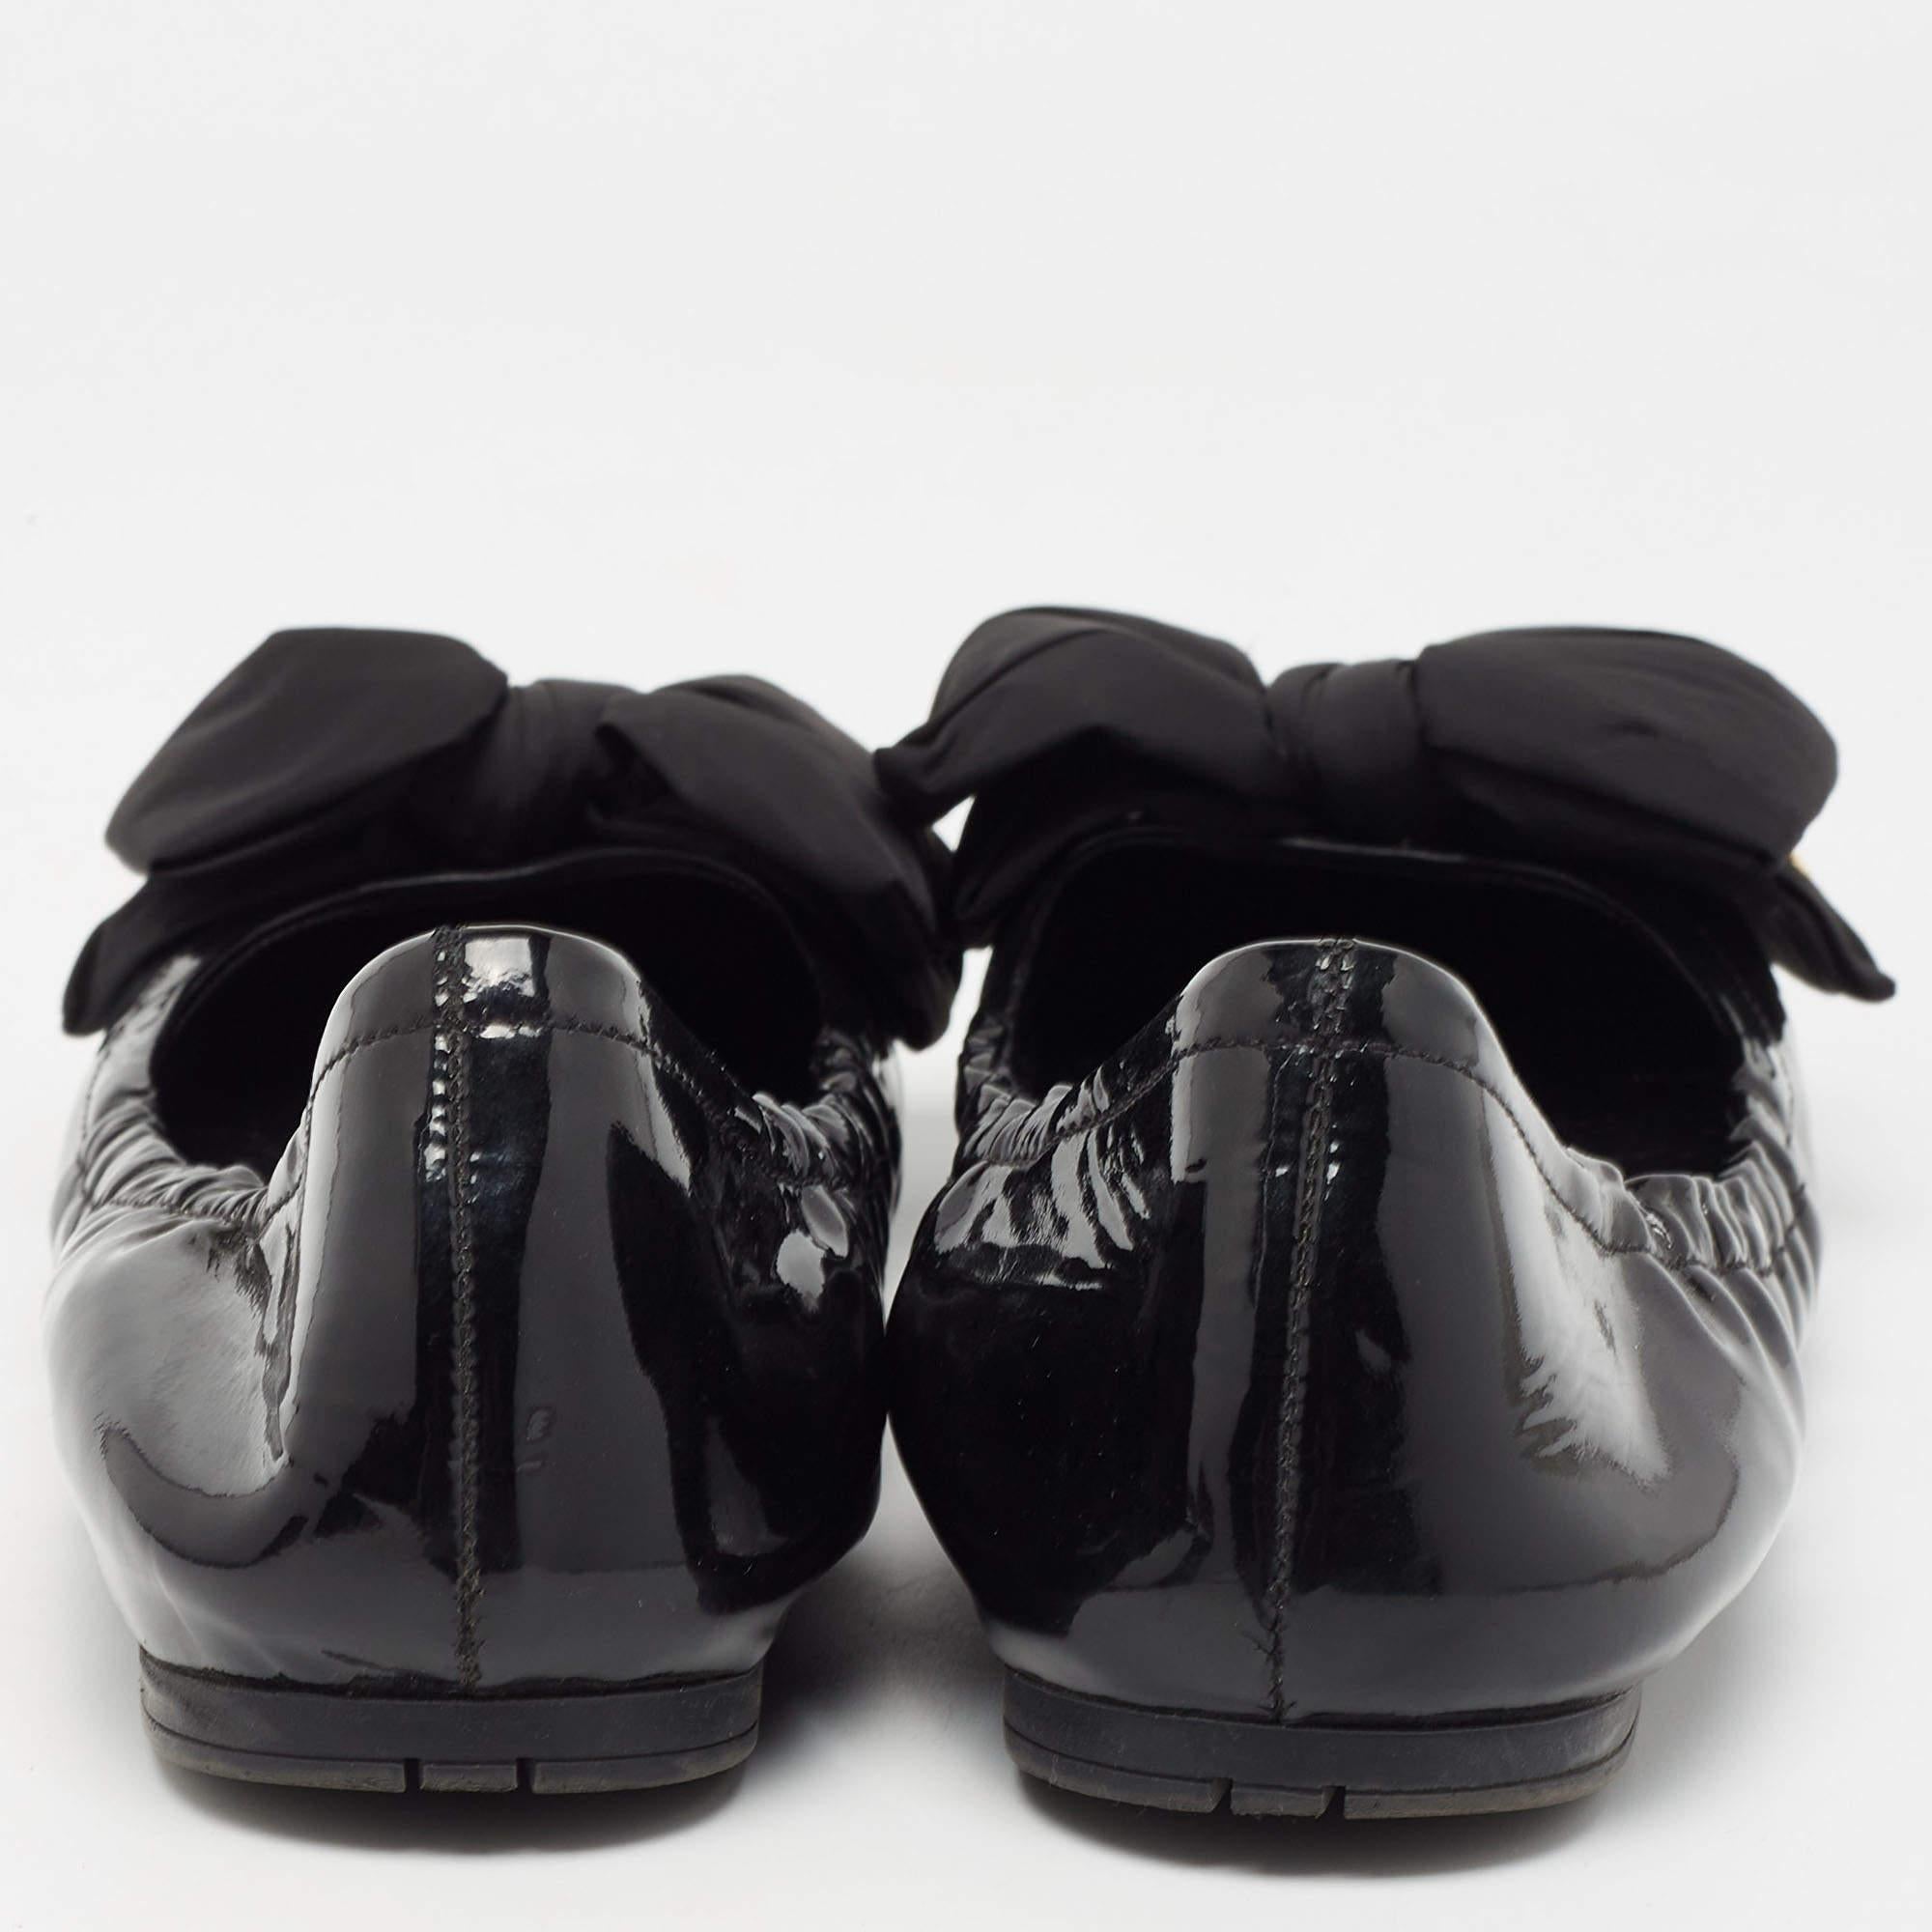 Prada Black Patent Leather Scrunch Ballet Flats Size 37 1